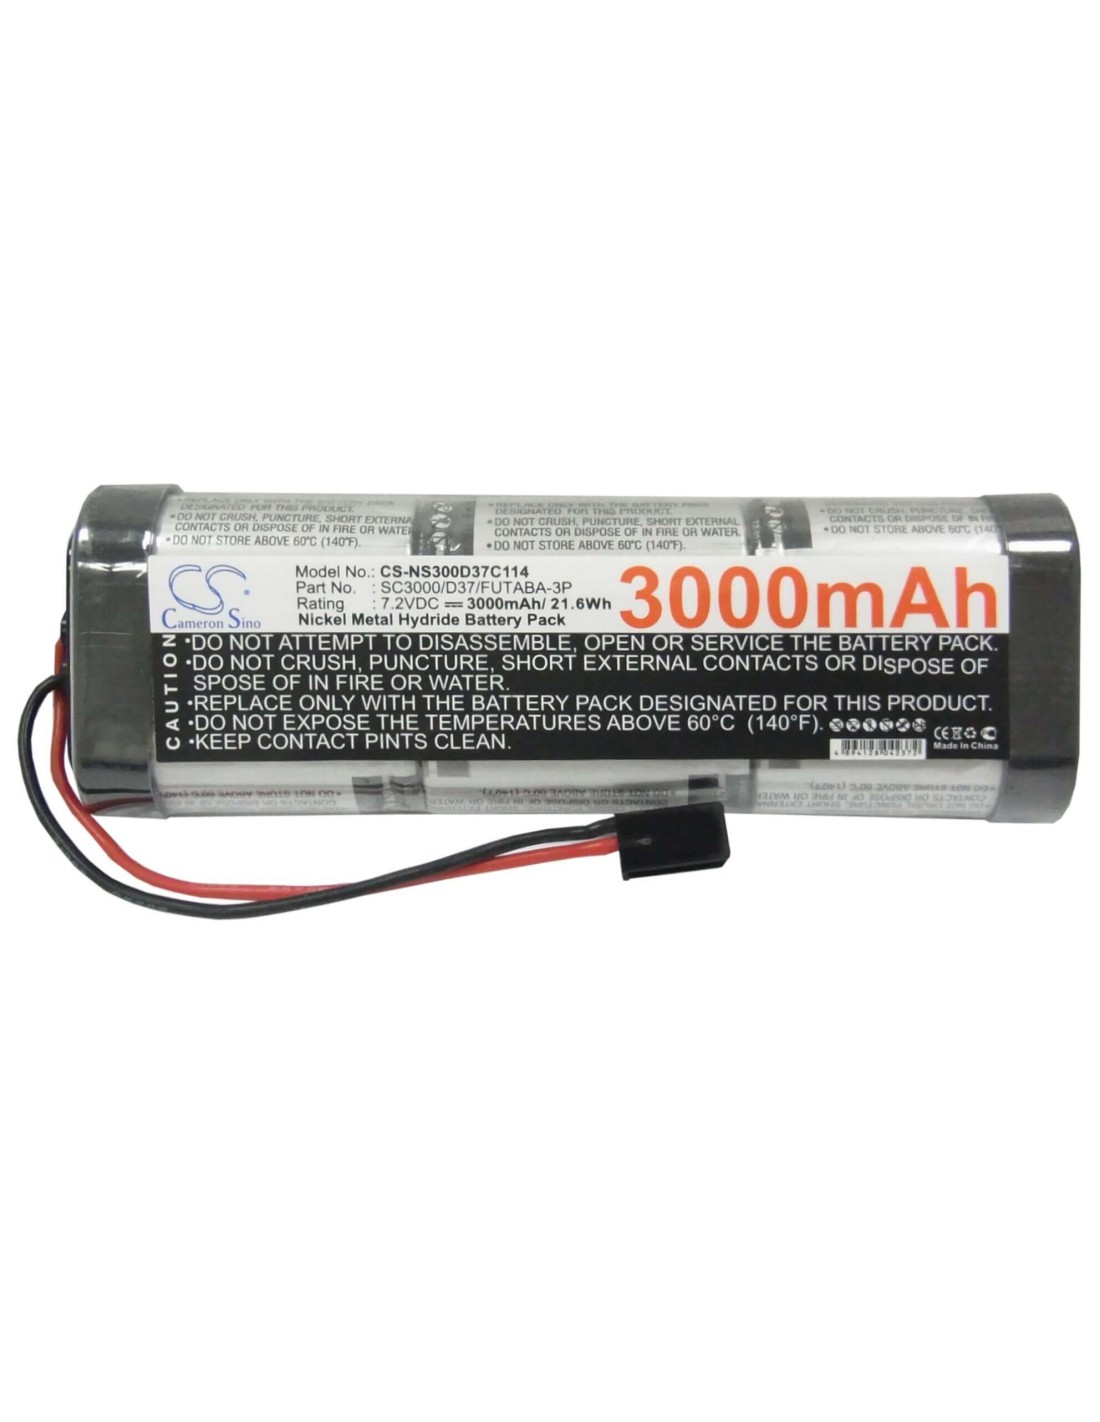 7.2V, Ni-MH, 3000mAh, Battery fits Cameron Sino, Cs-ns300d37c114, 21.6Wh